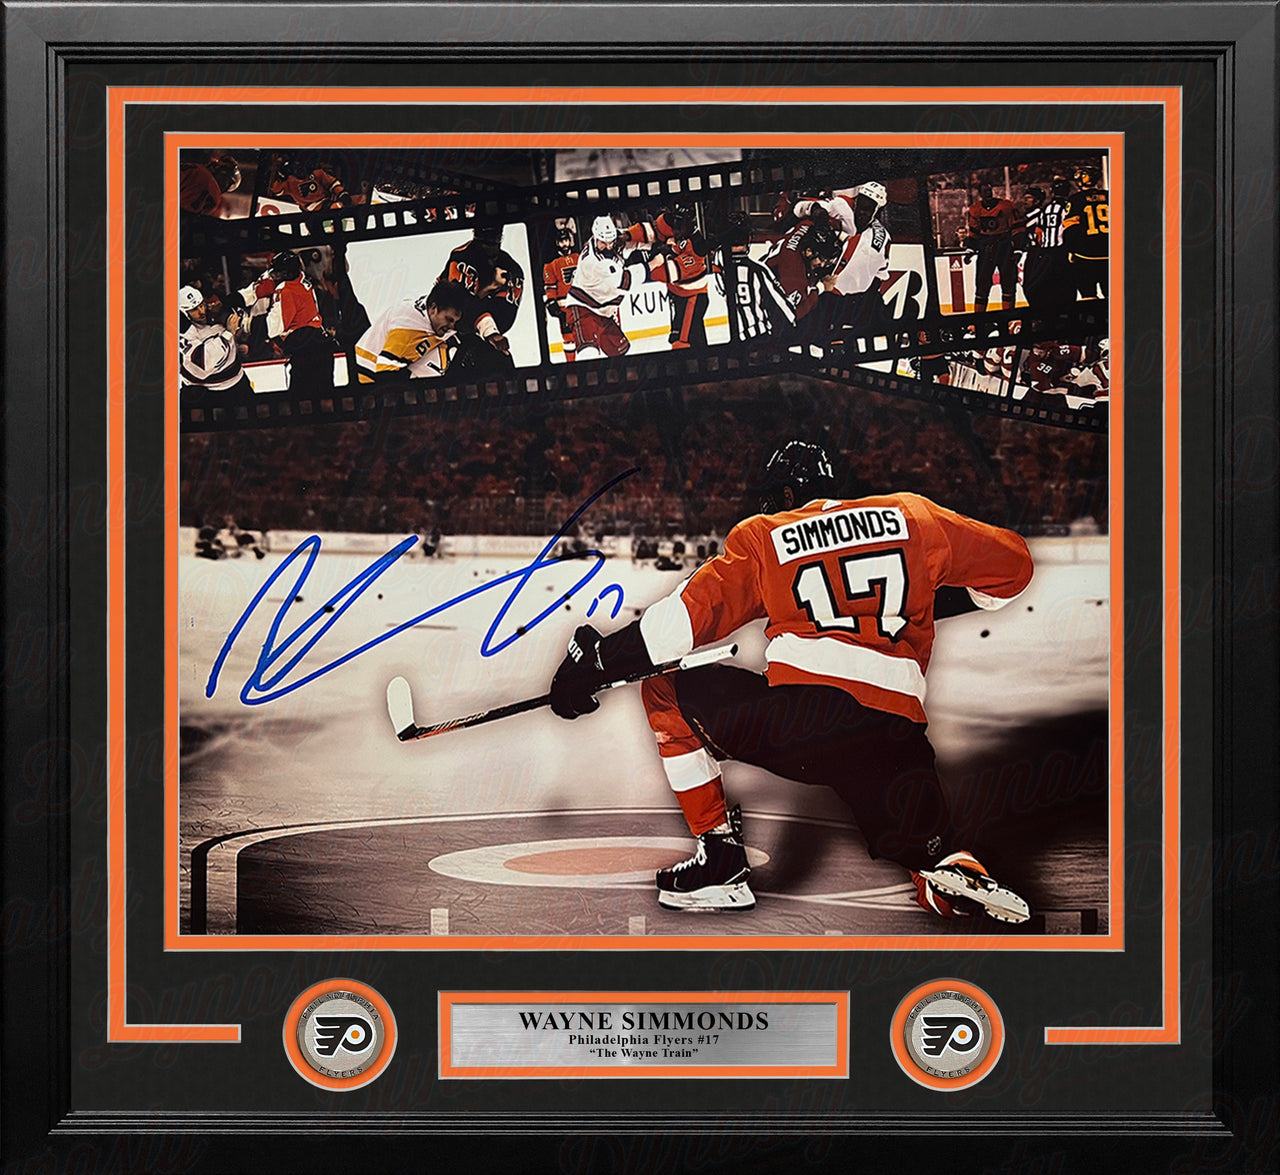 Wayne Simmonds Philadelphia Flyers Autographed 16" x 20" Framed Collage Hockey Photo